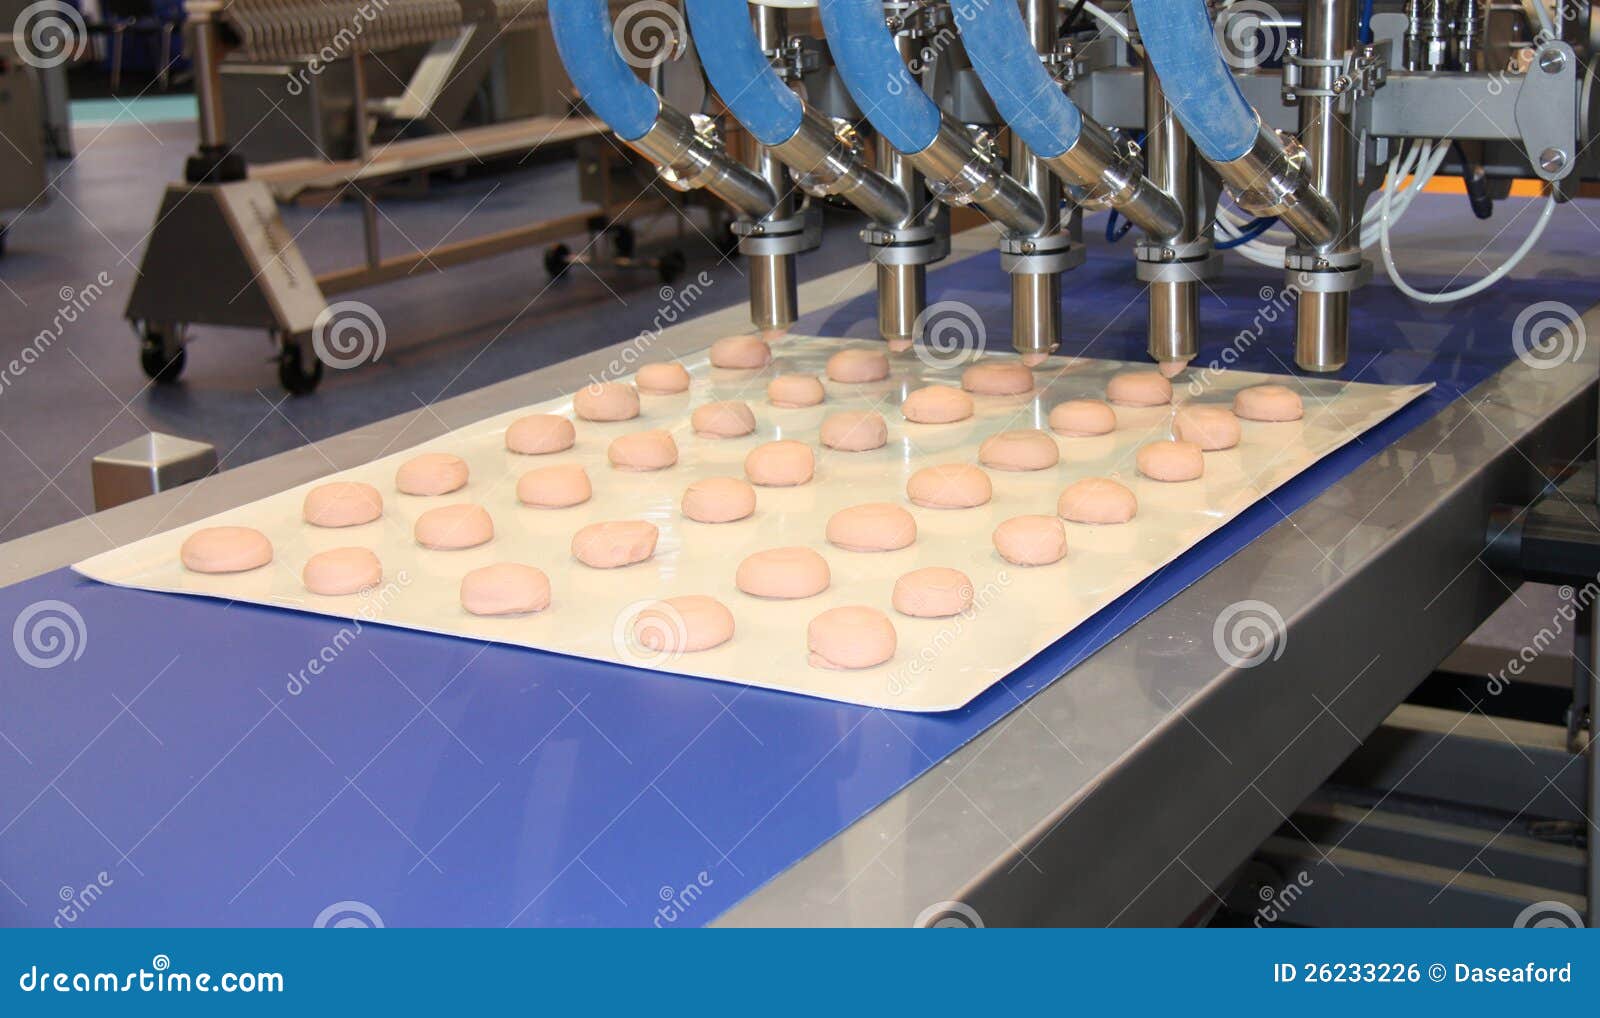 food processing machine.